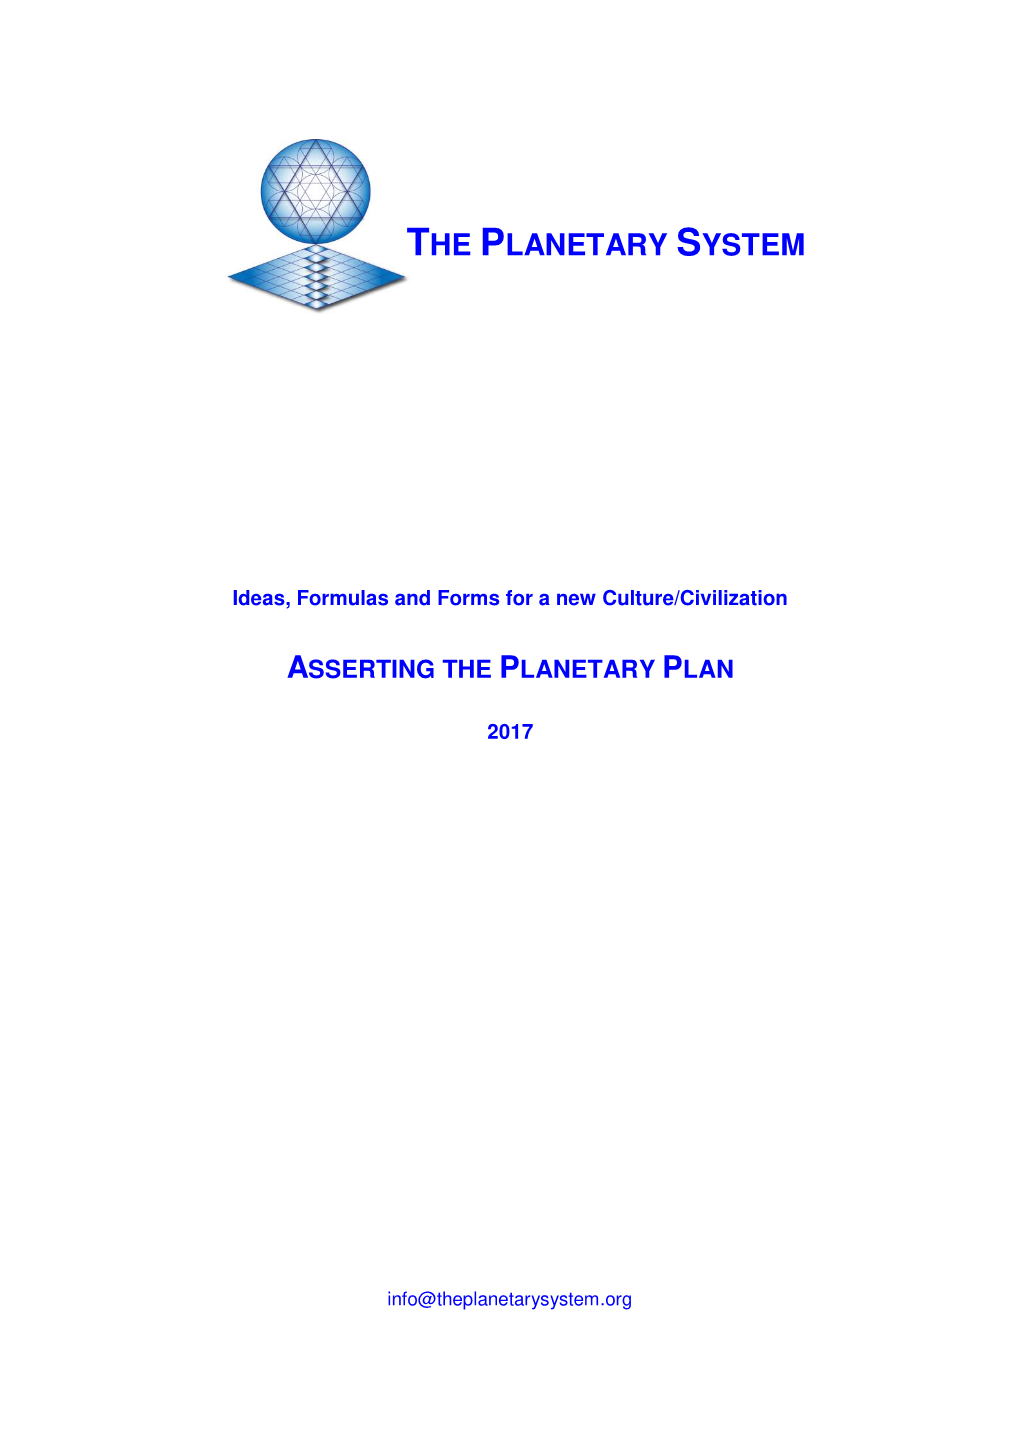 Asserting the Planetary Plan